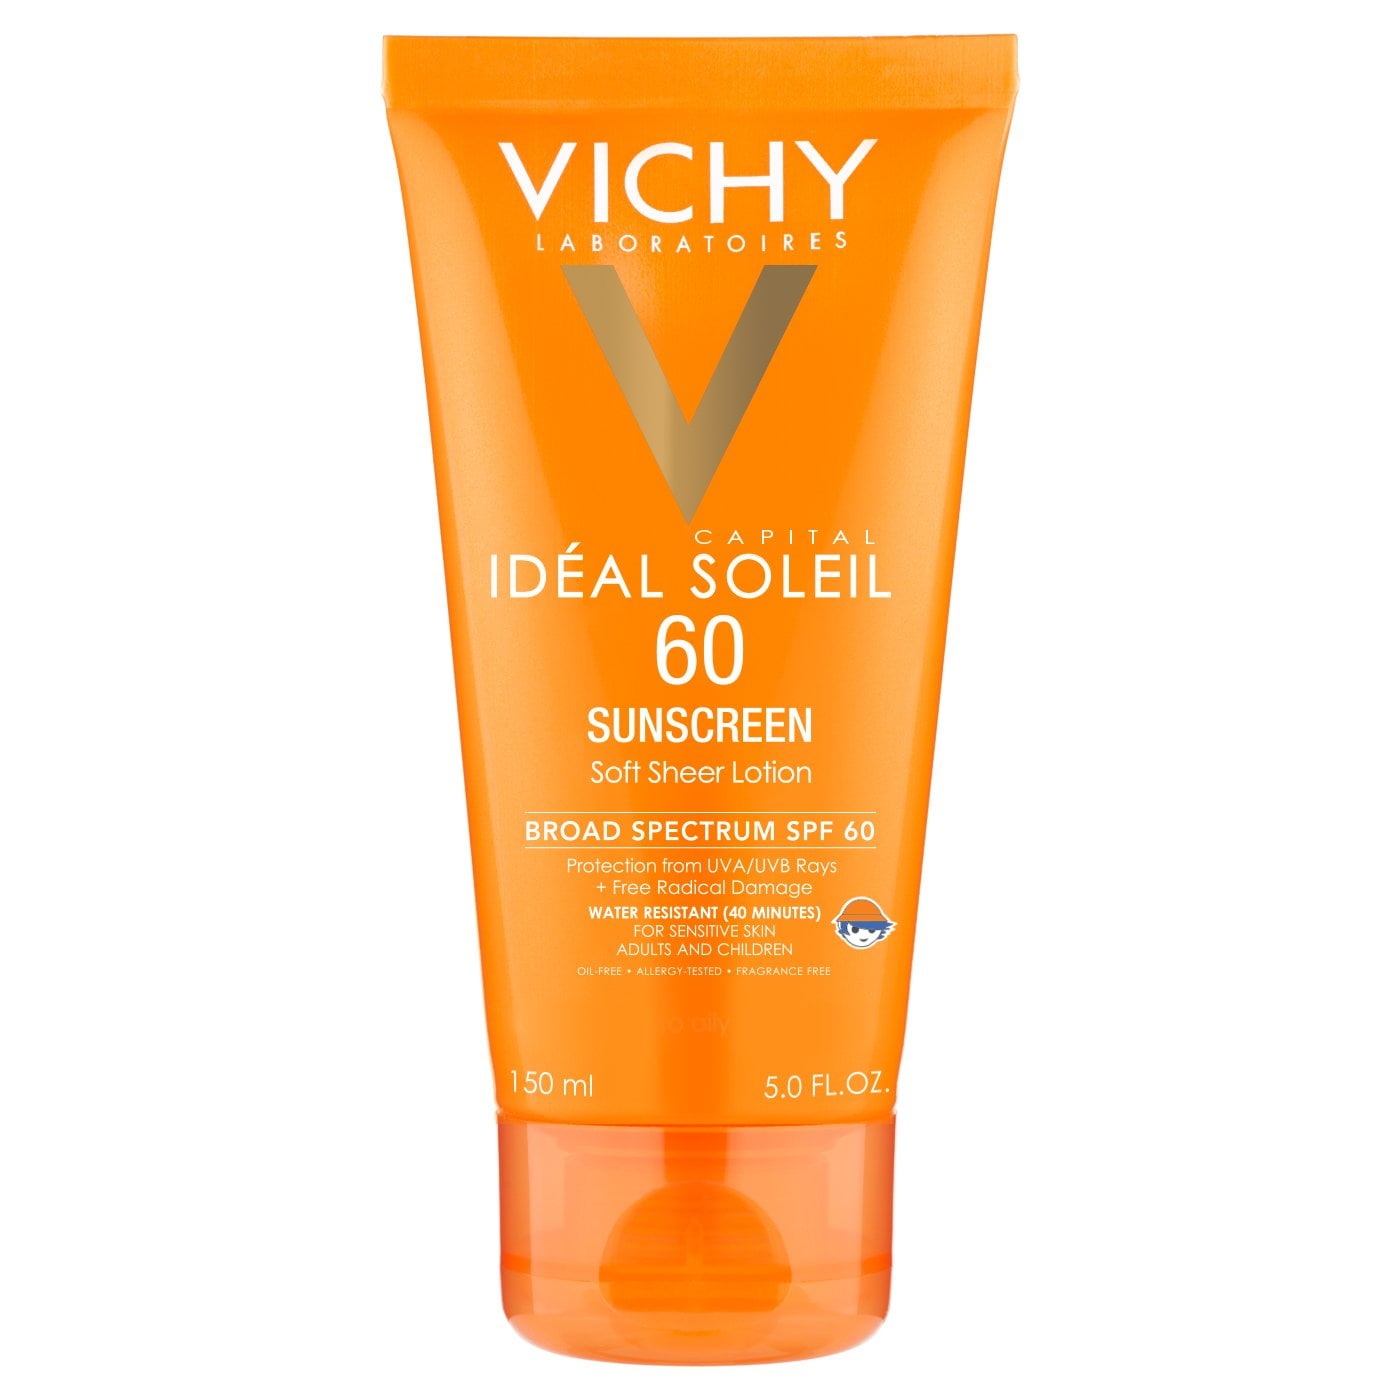 vichy-value-brands-vichy-laboratories-capital-soleil-spf-60-soft